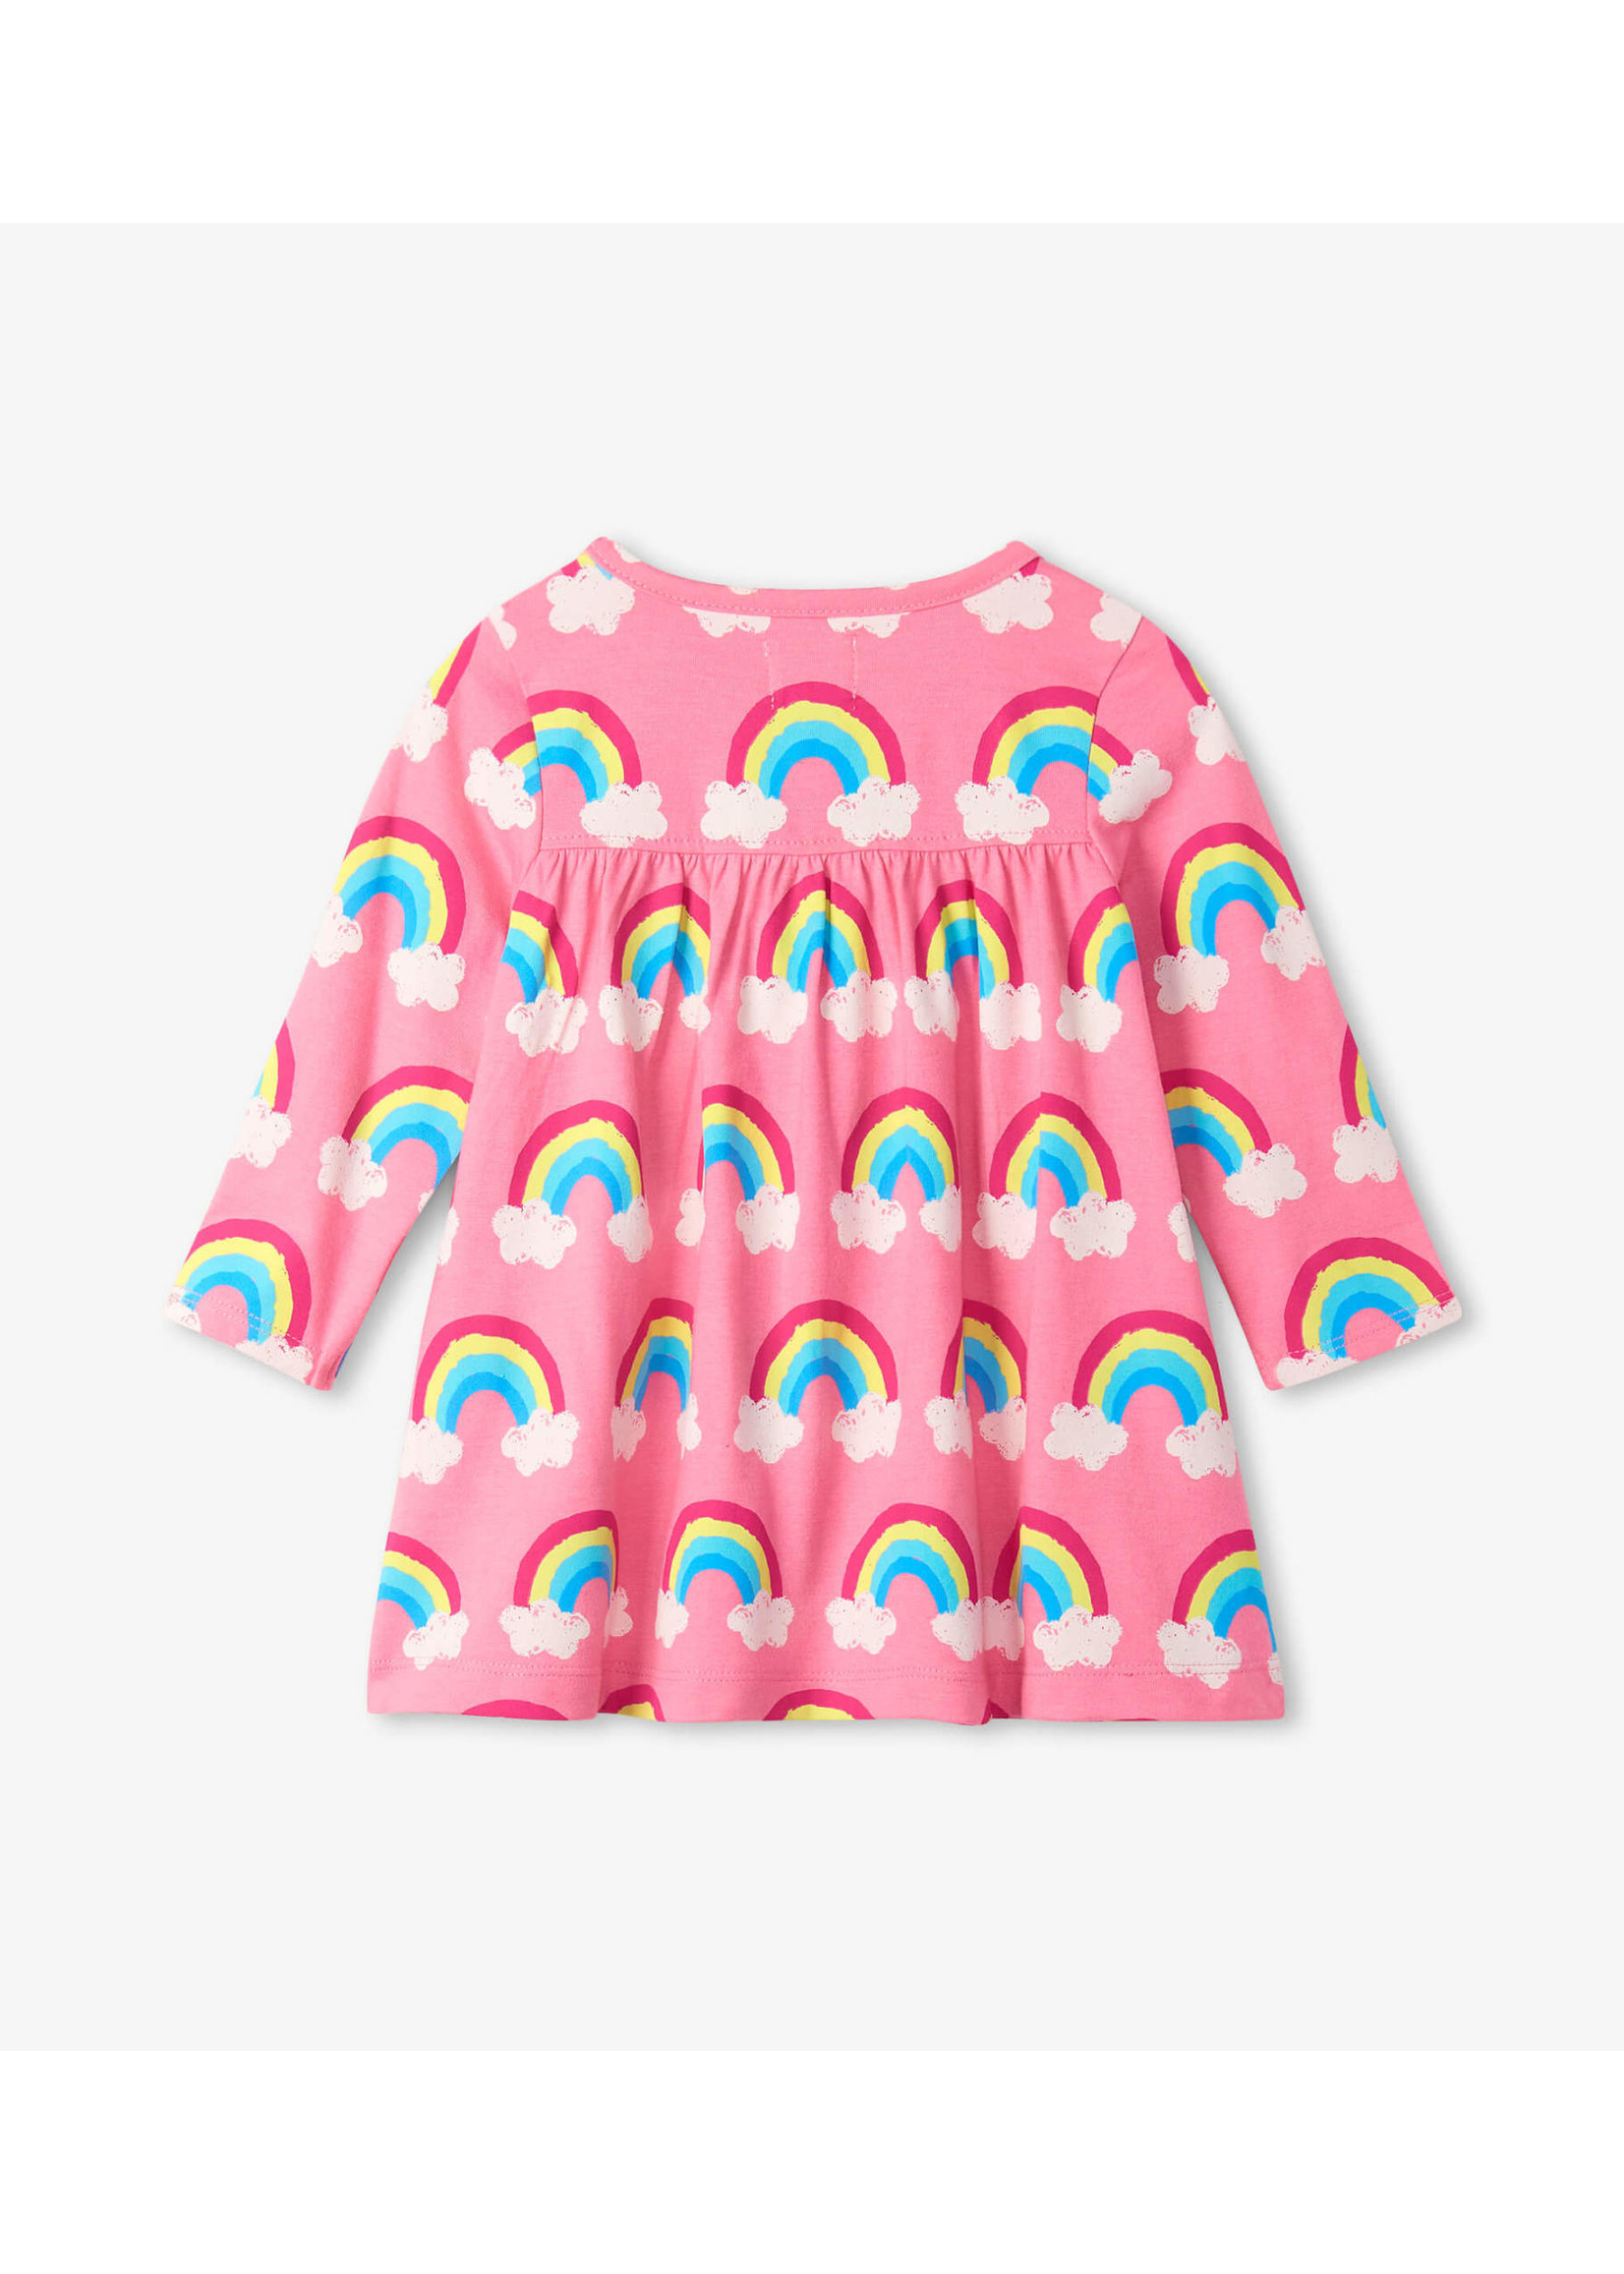 Hatley Pink Joyful Rainbows Dress